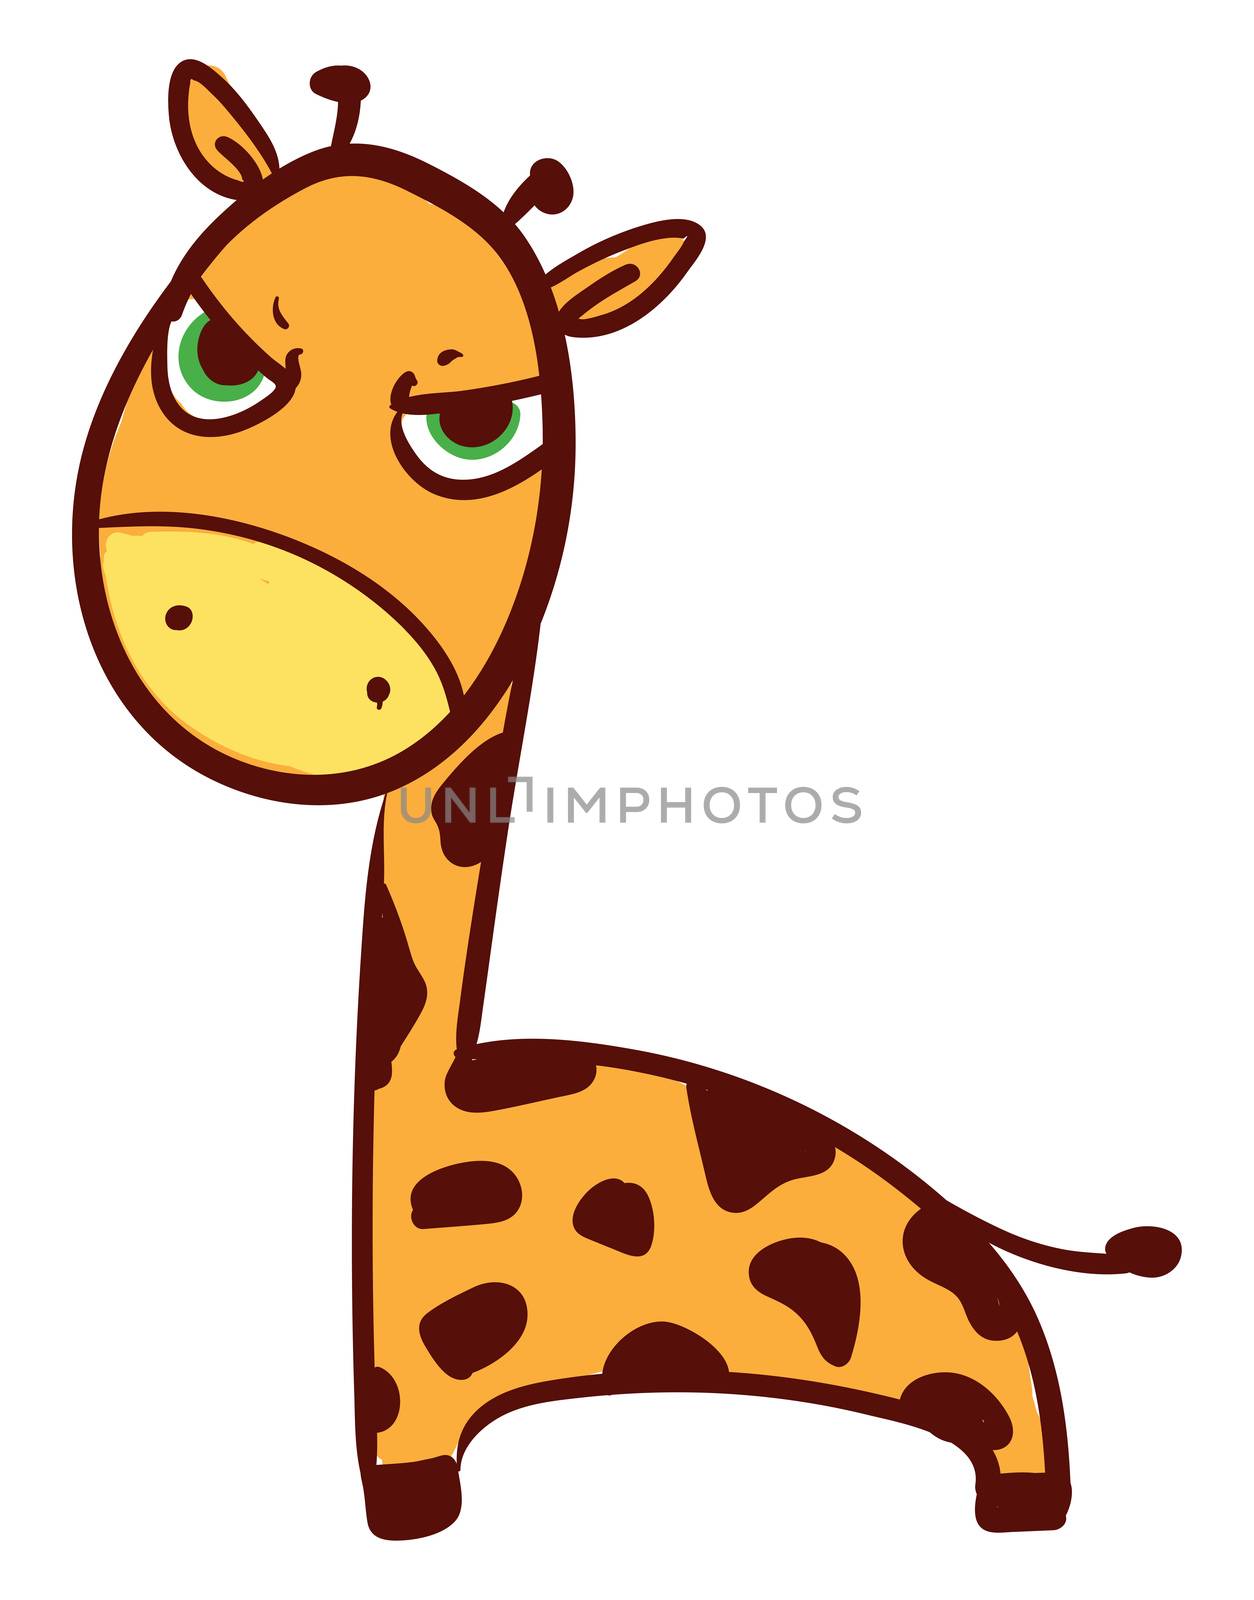 Angry giraffe , illustration, vector on white background